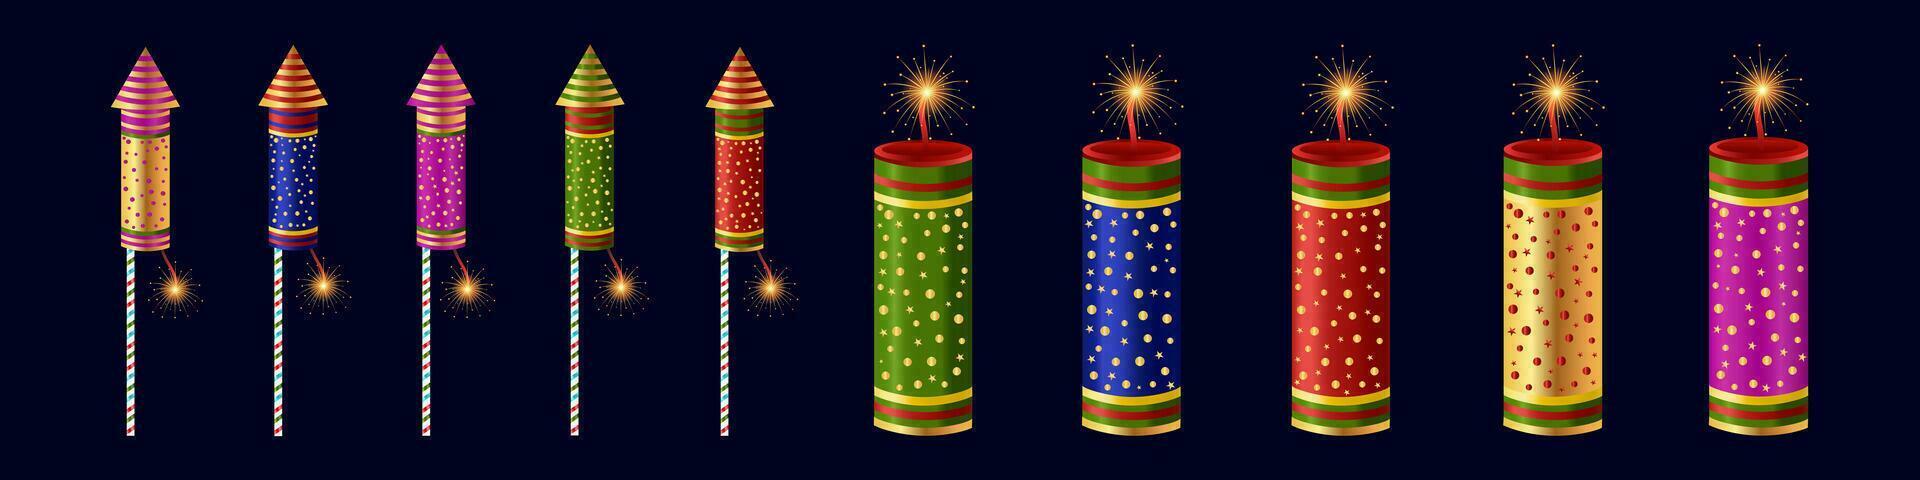 contento Diwali Festival elemento diya lampada cracker cielo lanterna fan fuochi d'artificio bhia dooj vettore